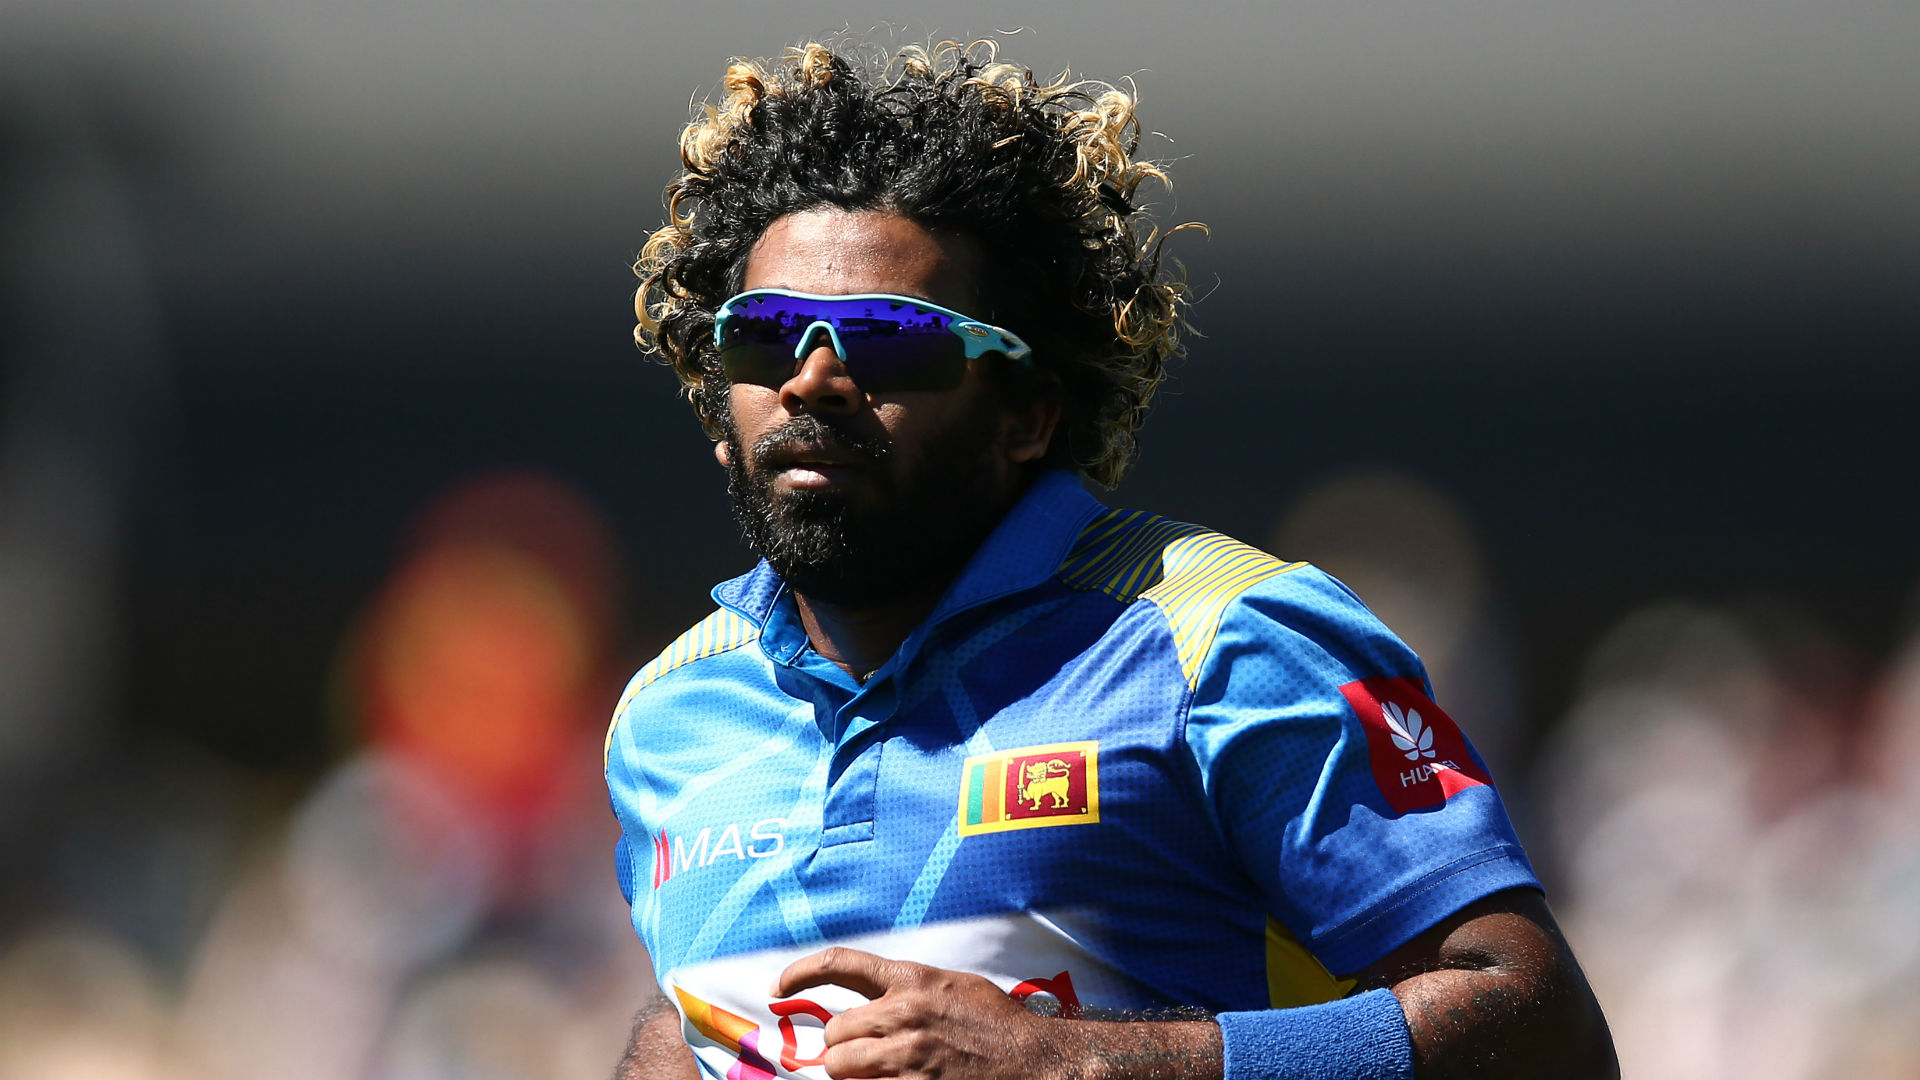 Sri Lanka seamer Lasith Malinga will call time on his cricketing career next year.